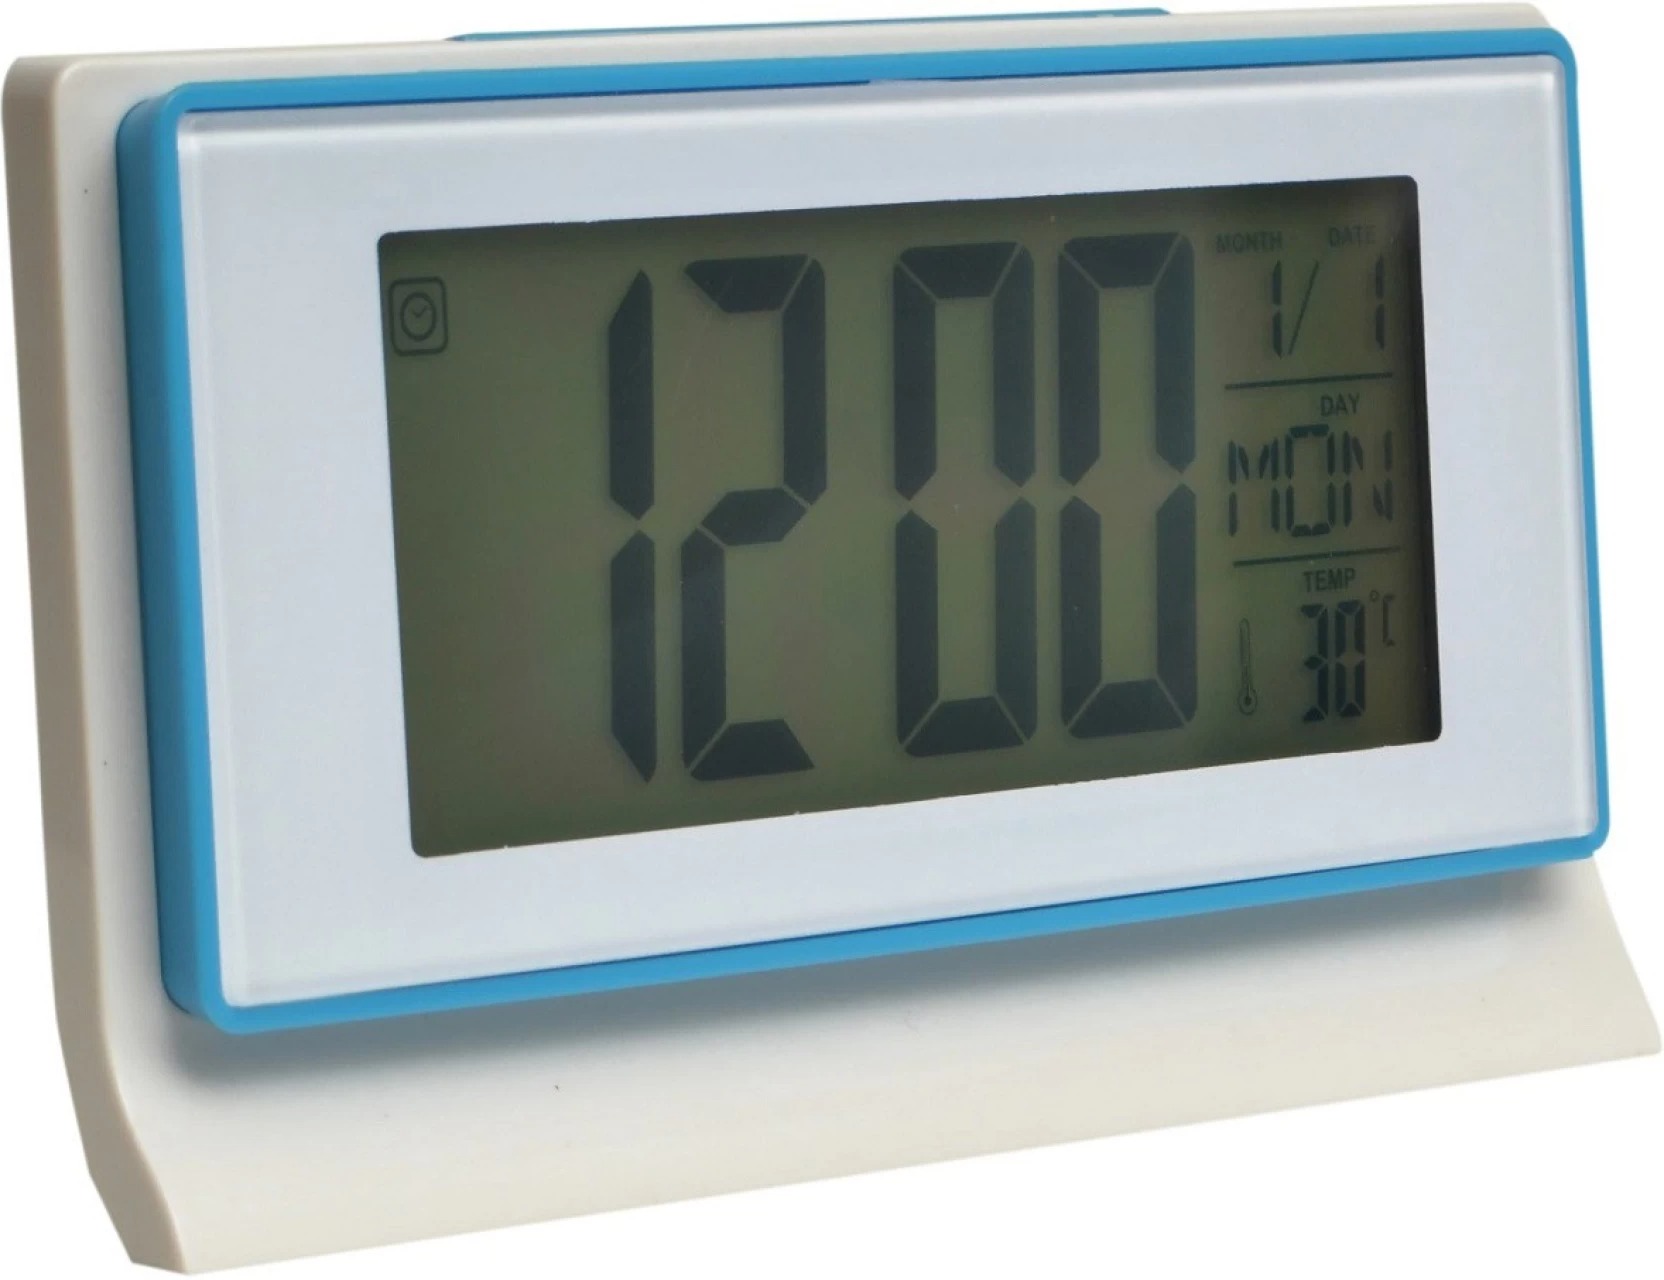 Discover the product Ceas digital cu alarma DS-3601 control vocal temperatura si calendar from gave.ro